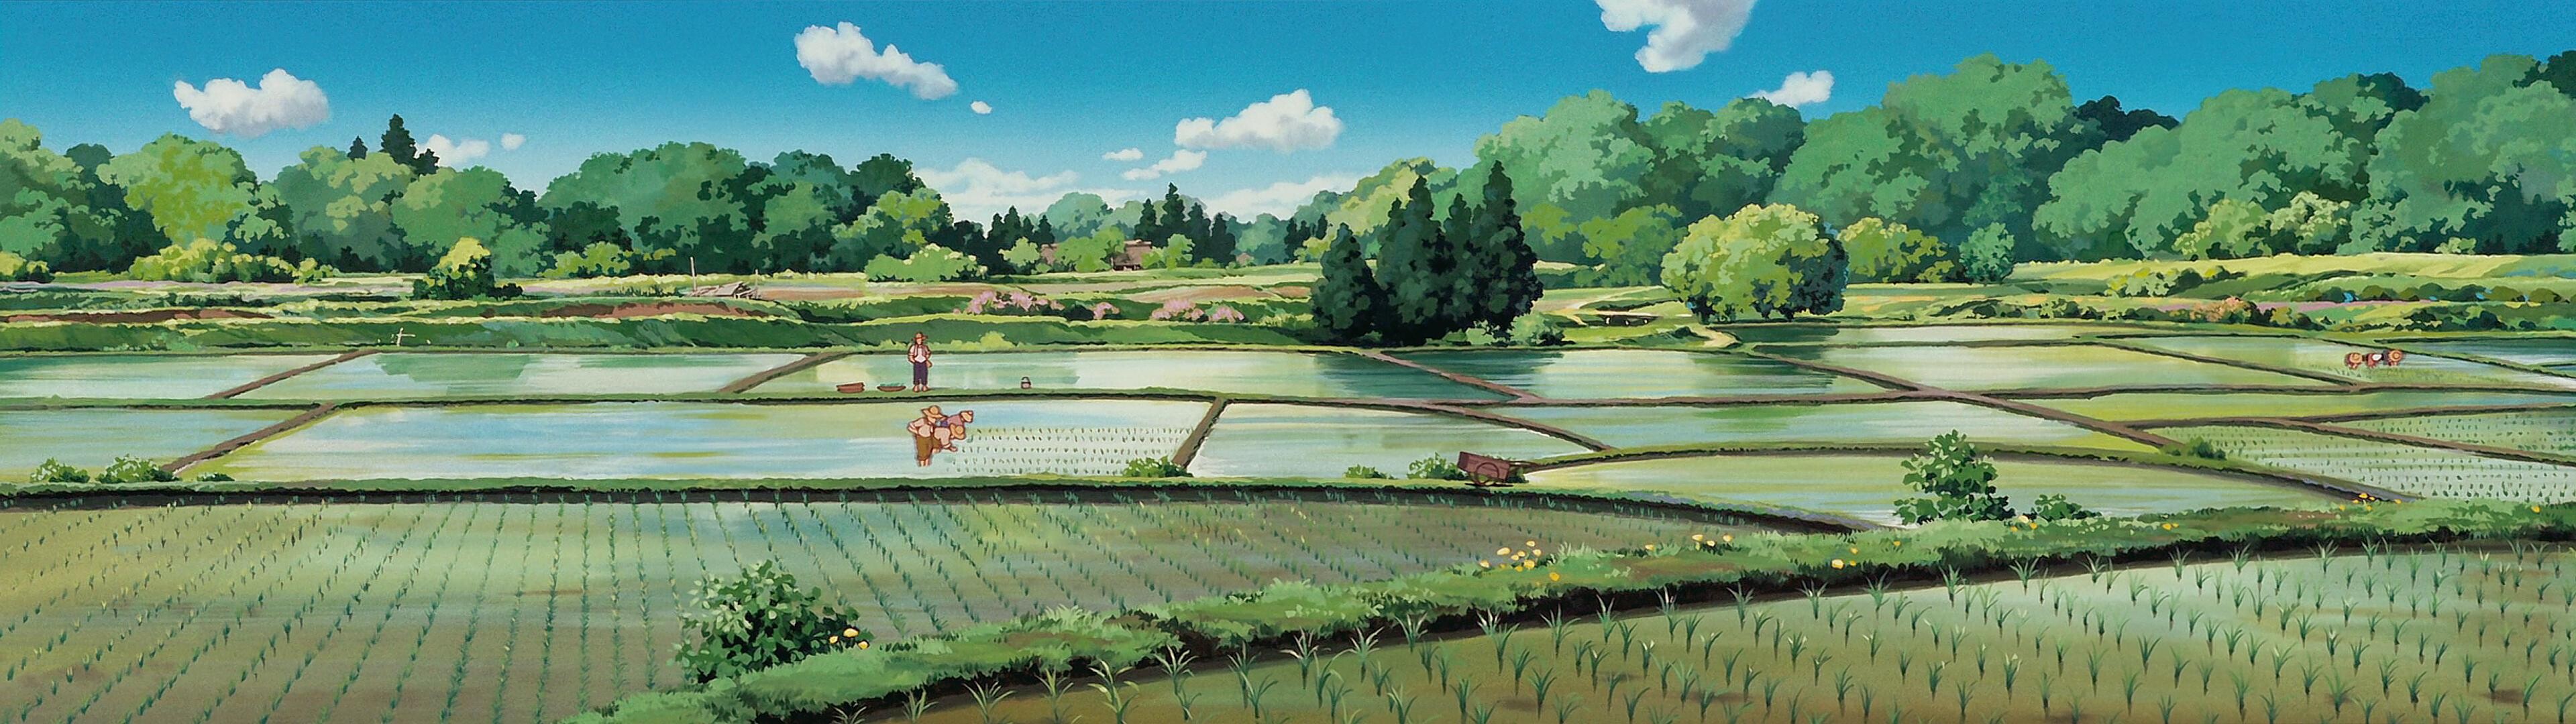 Studio Ghibli: Isao Takahata directed "Grave of the Fireflies" and "The Tale of Princess Kaguya". 3840x1080 Dual Screen Background.